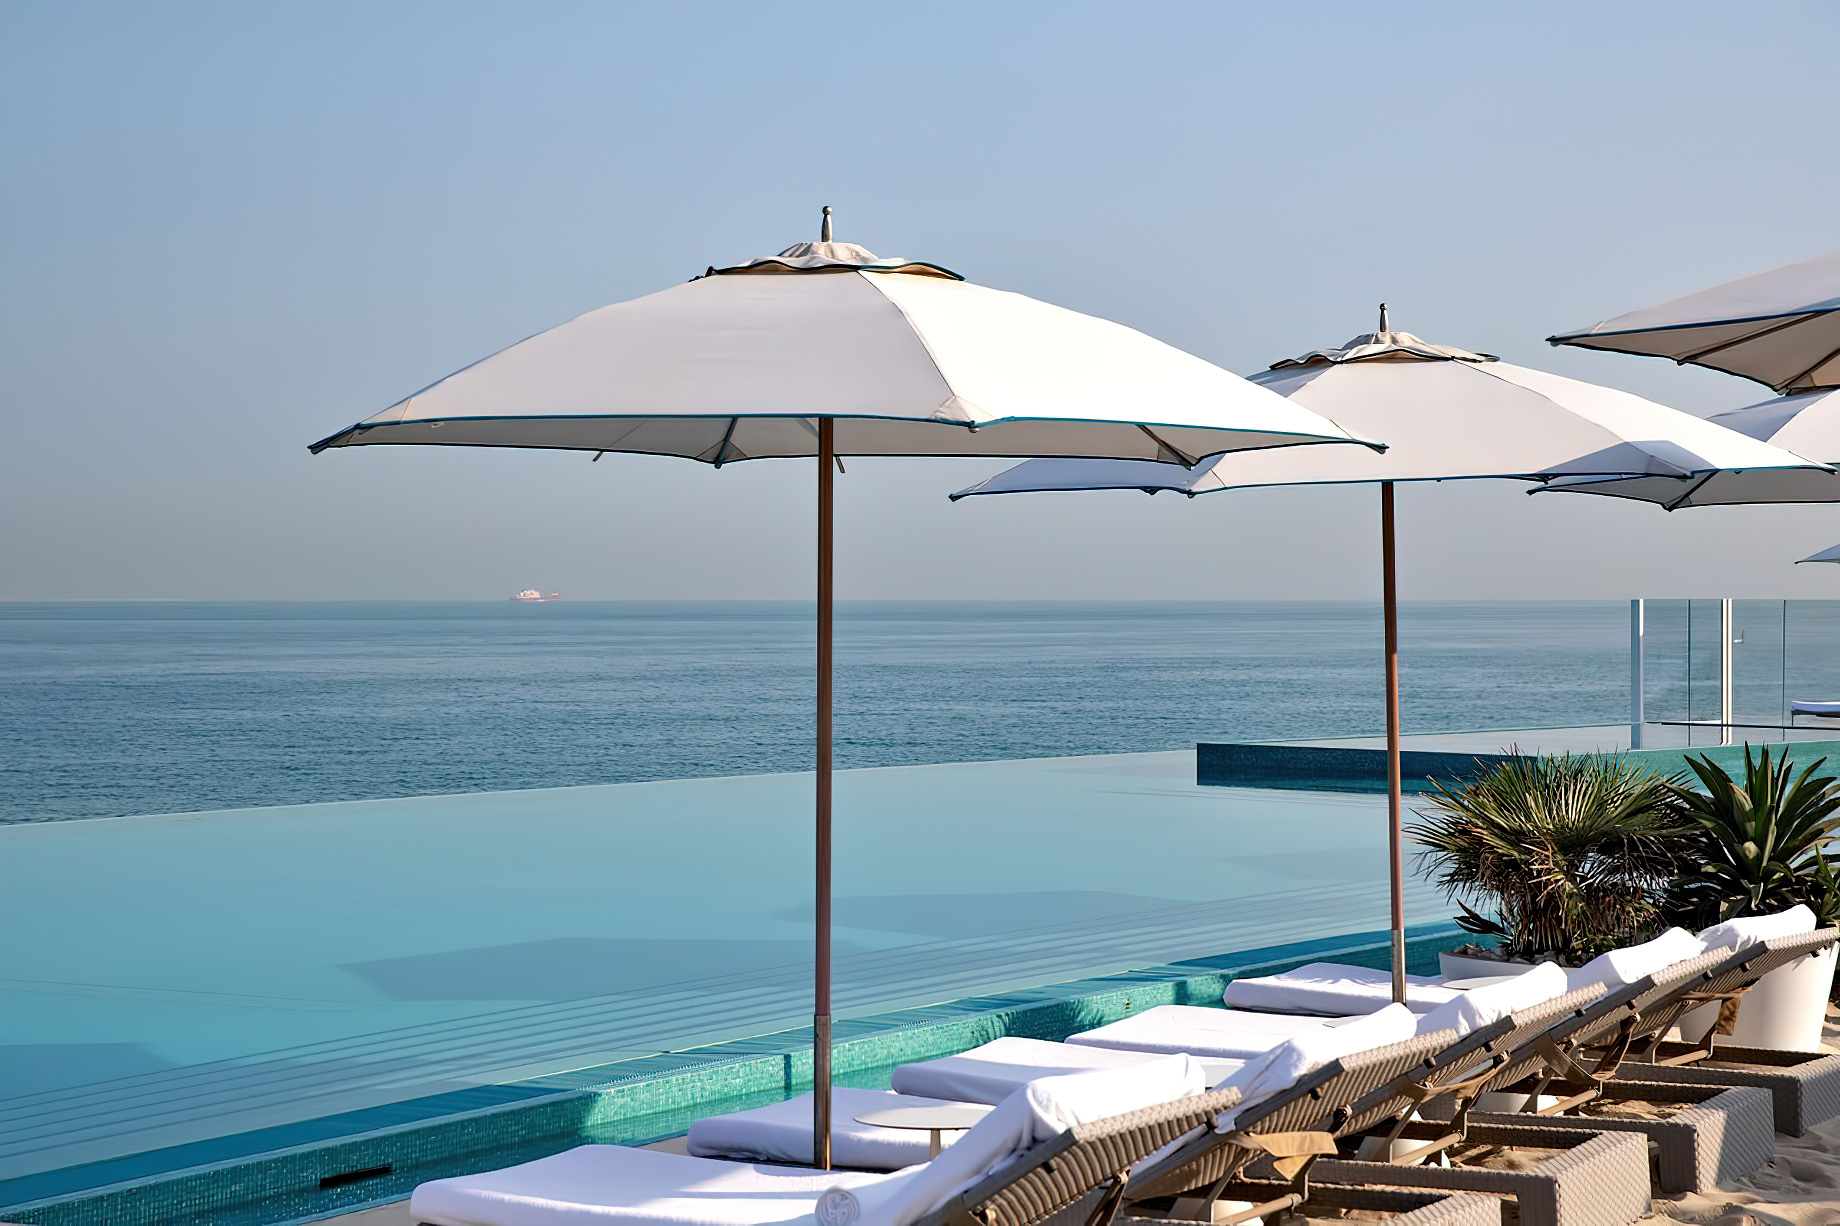 Burj Al Arab Jumeirah Hotel – Dubai, UAE – Burj Al Arab Terrace Poolside Ocean View